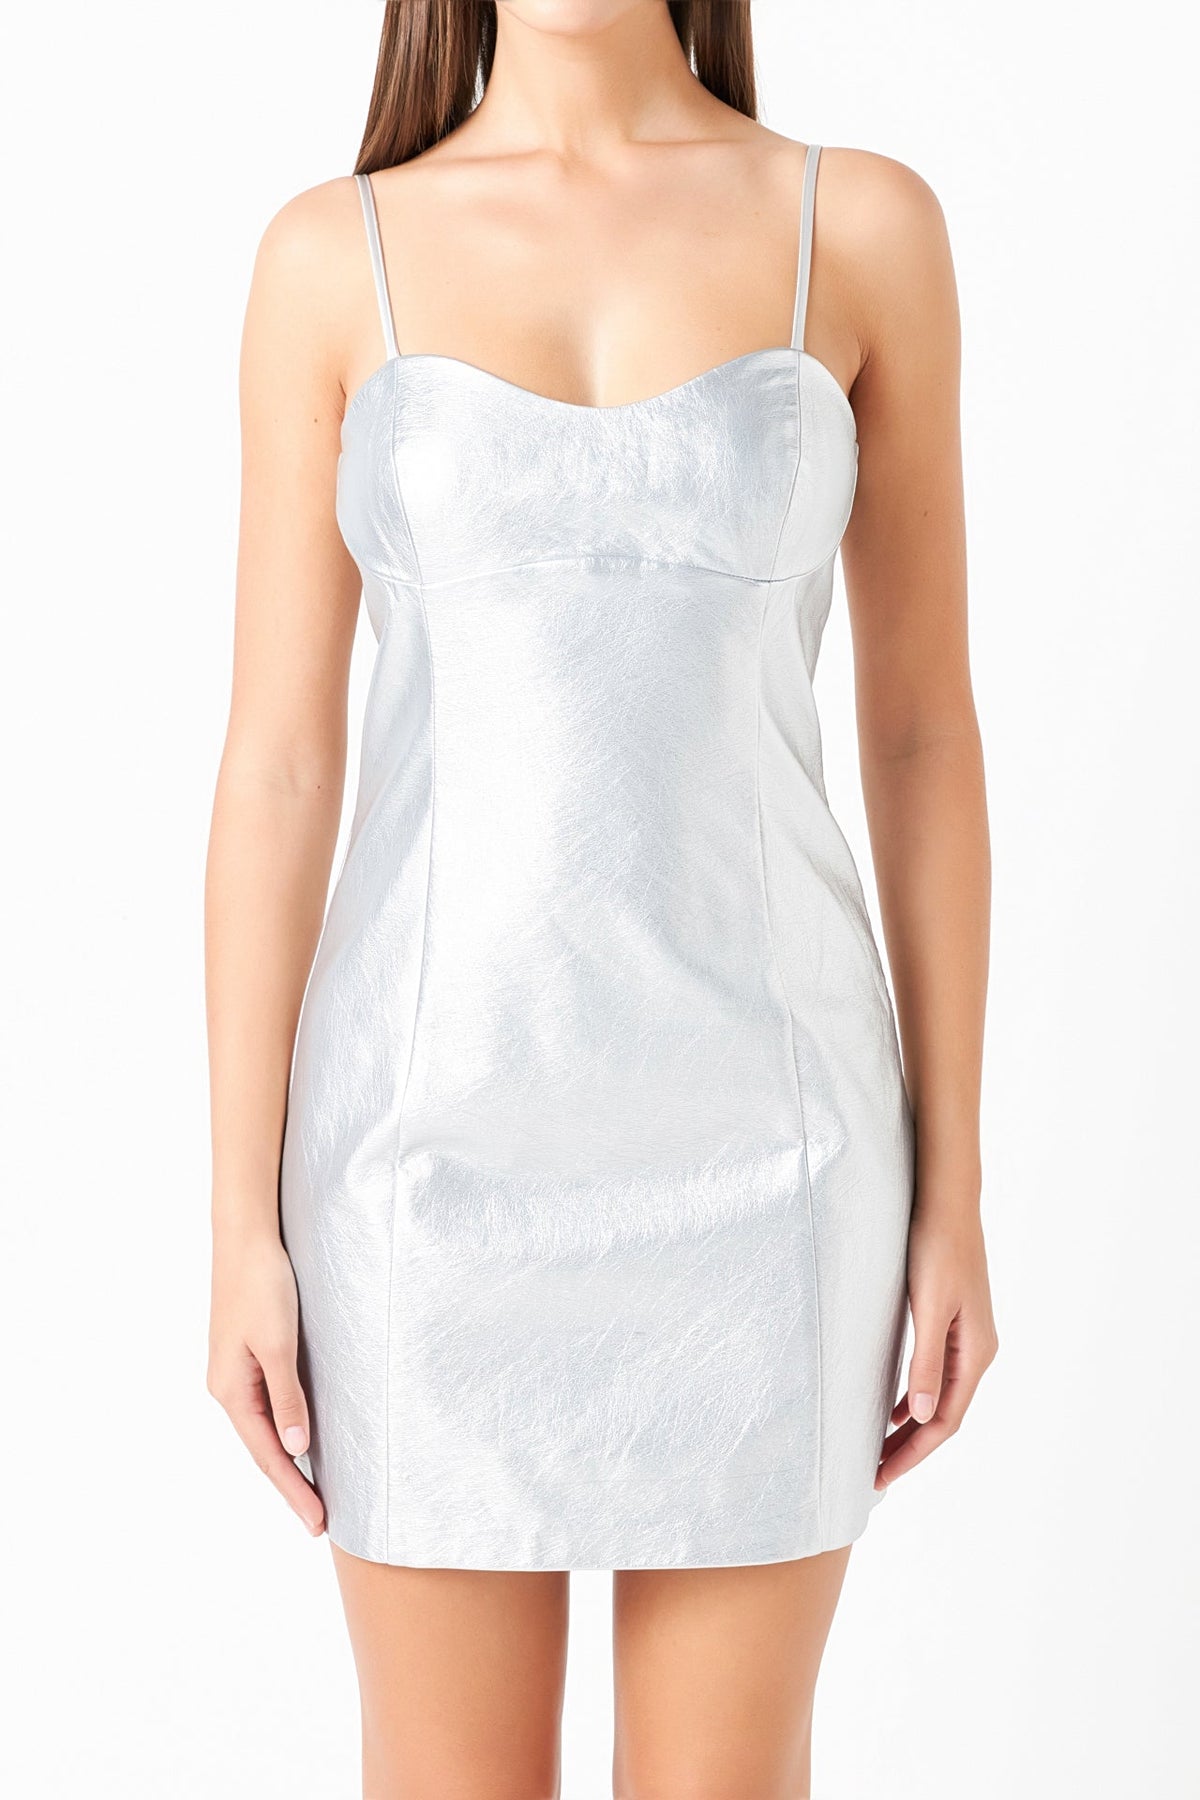 ENDLESS ROSE - Metallic Pu Mini Dress - DRESSES available at Objectrare